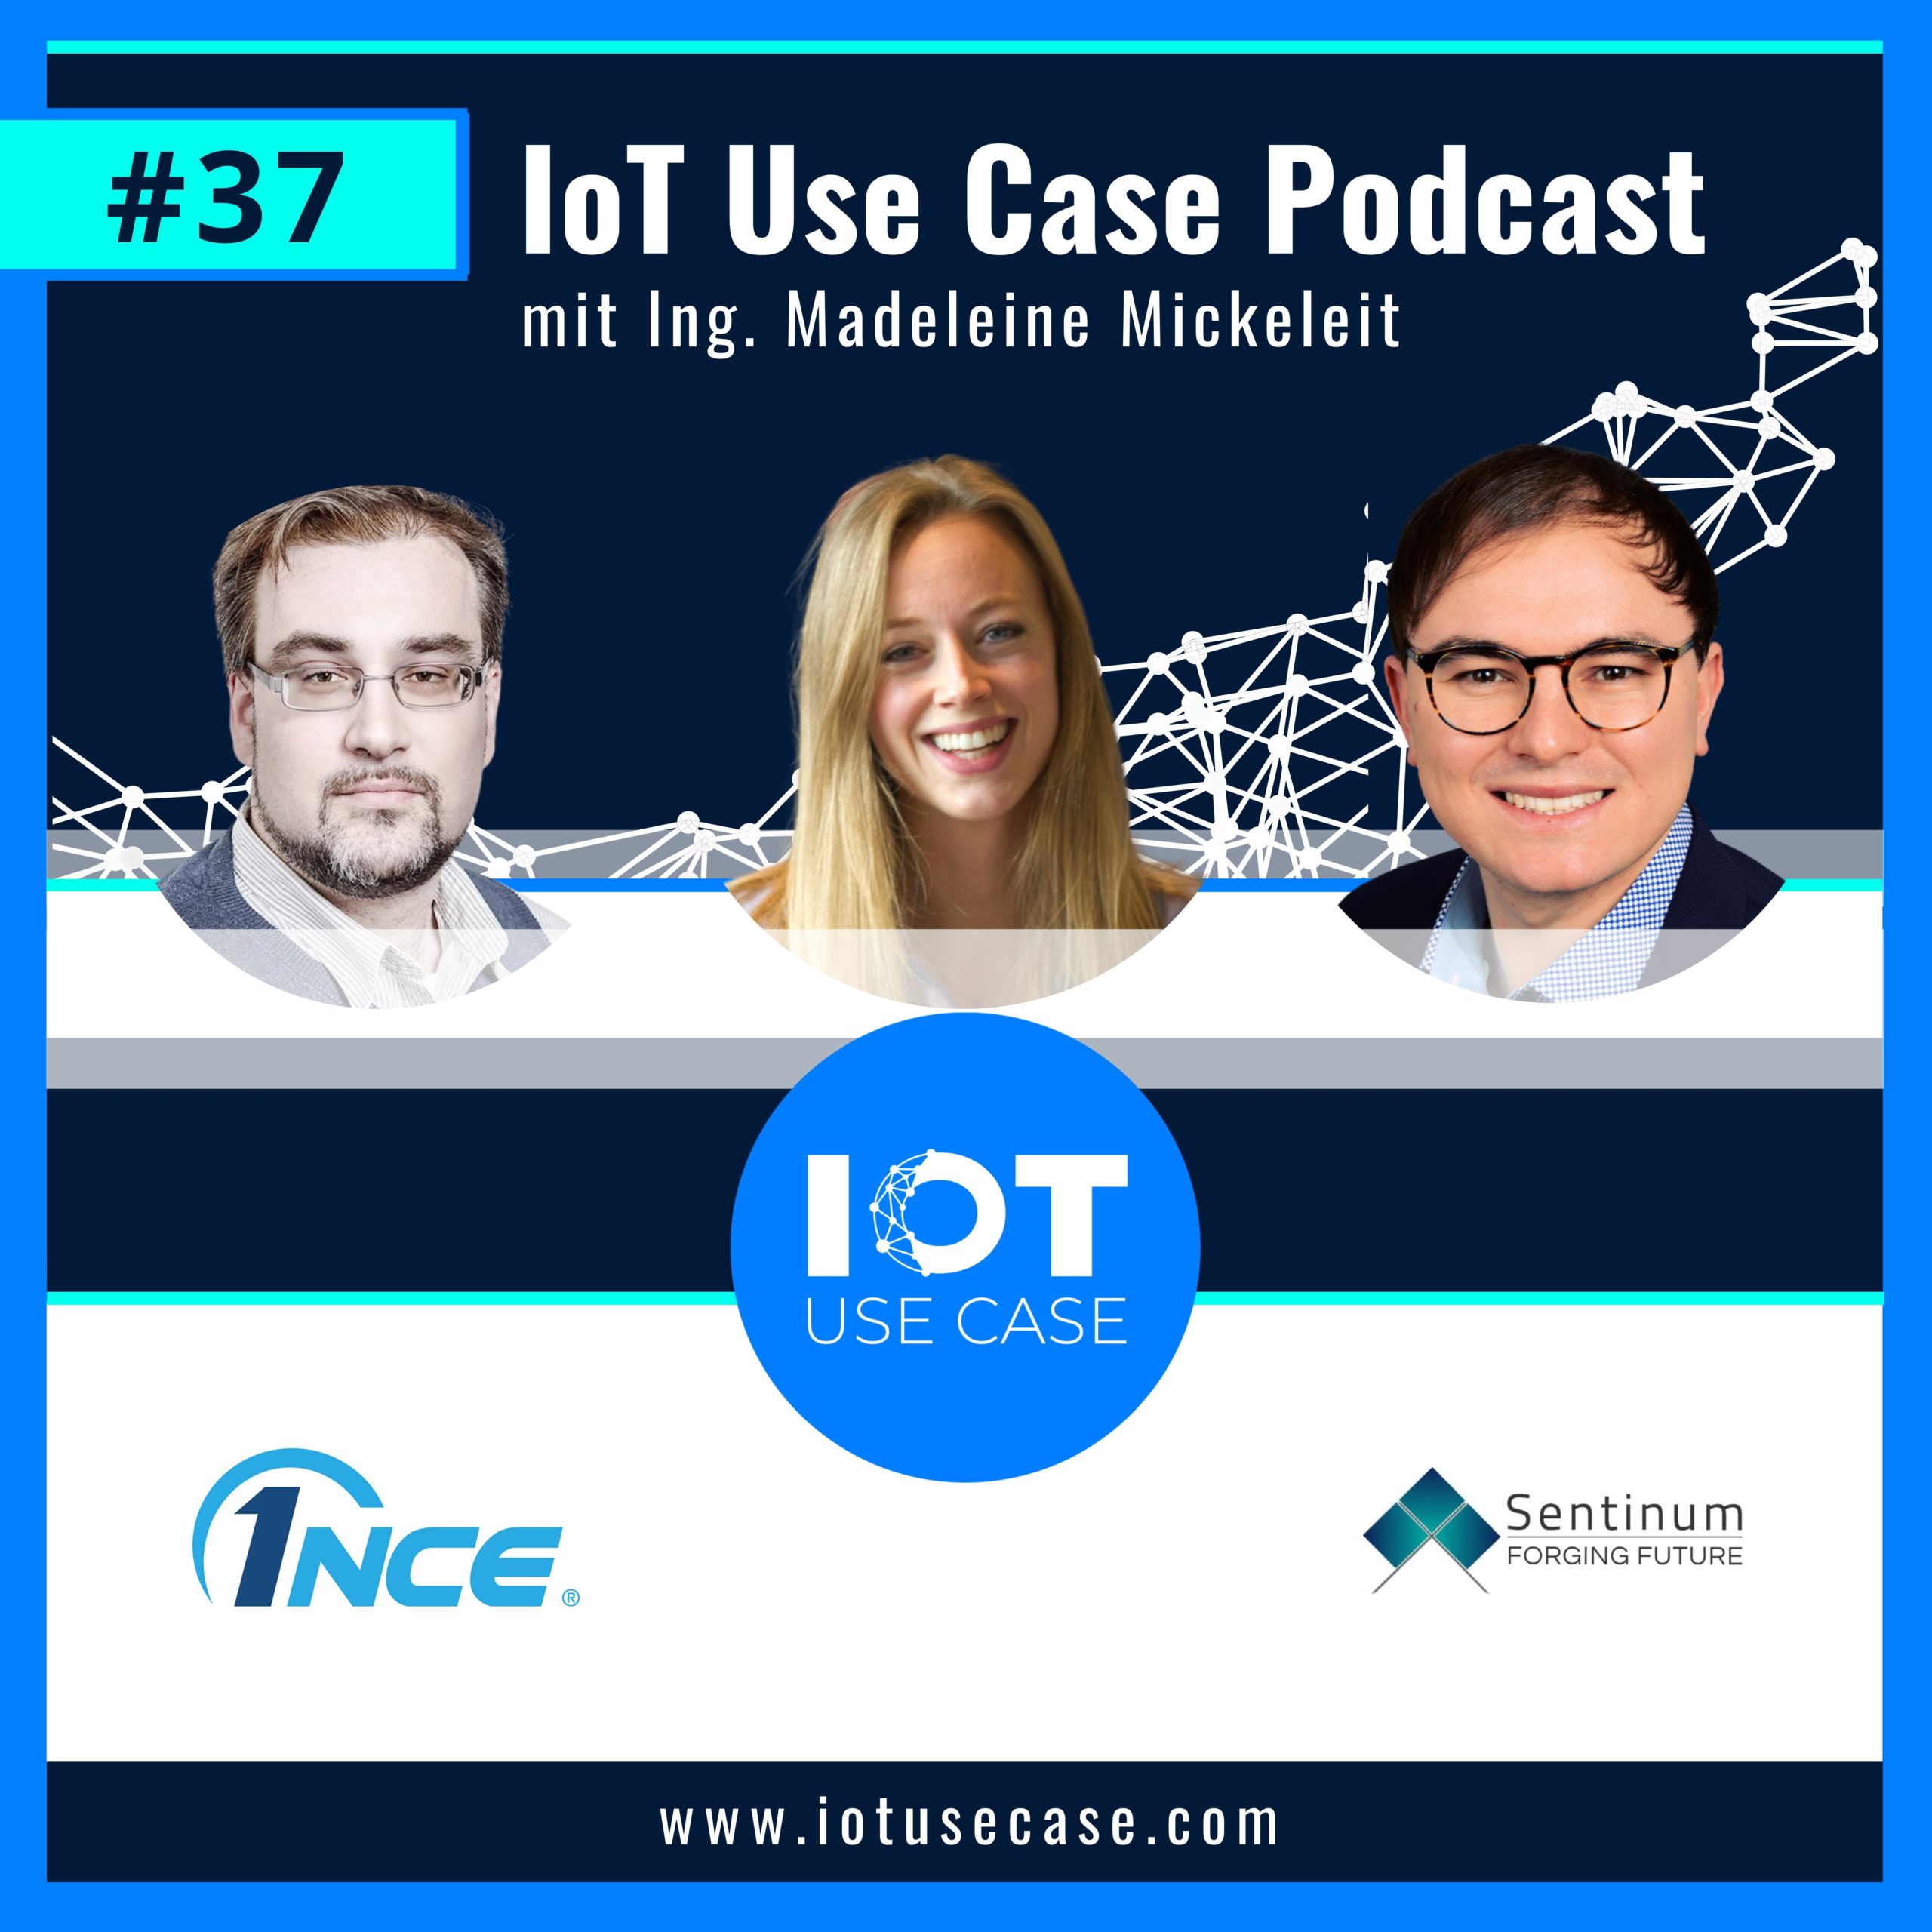 IoT Use Case Podcast #37 1NCE, Sentinum